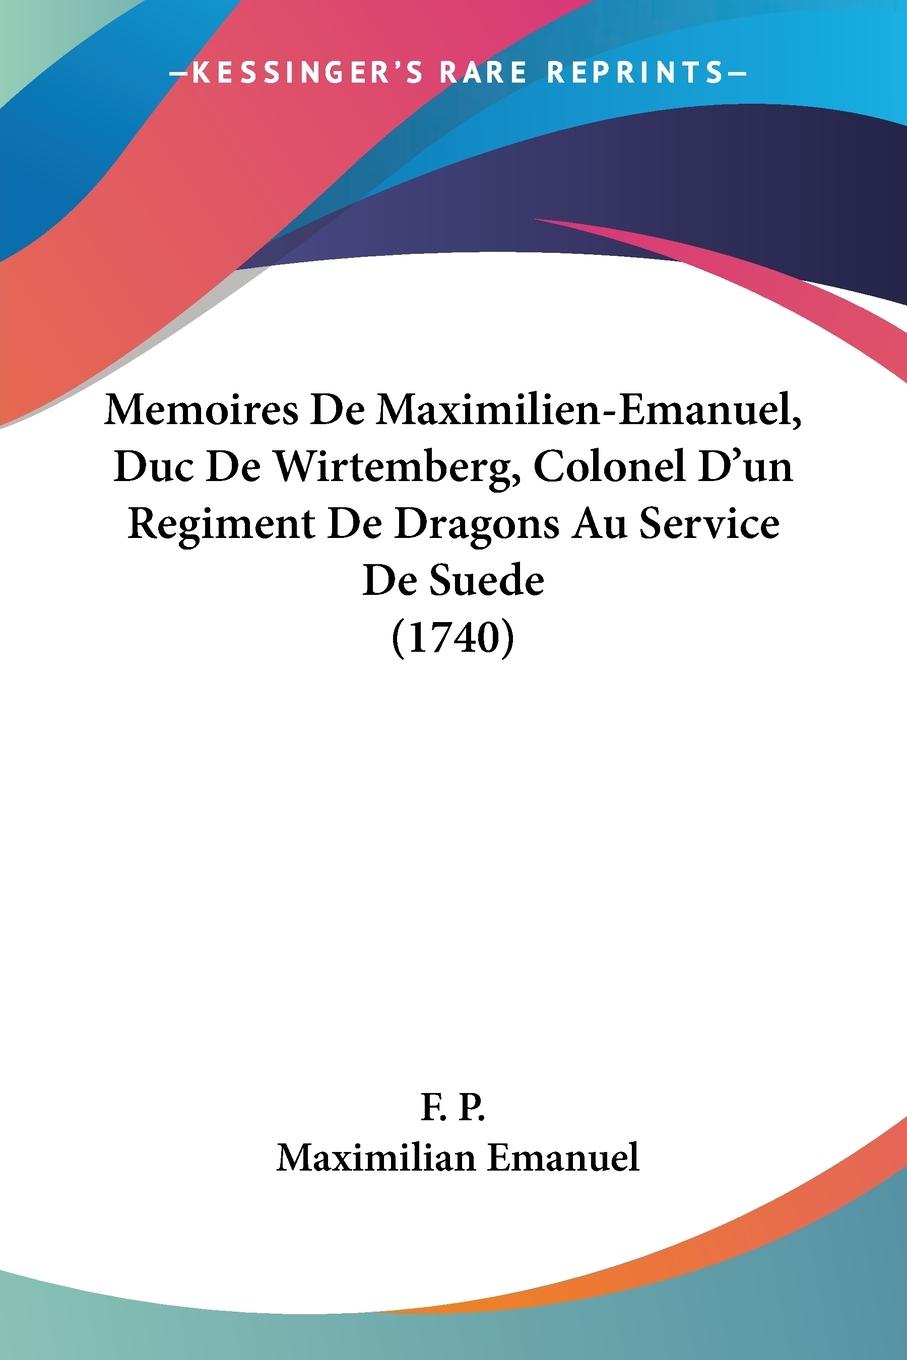 Memoires De Maximilien-Emanuel, Duc De Wirtemberg, Colonel D un Regiment De Dragons Au Service De Suede (1740) - F. P. Emanuel, Maximilian